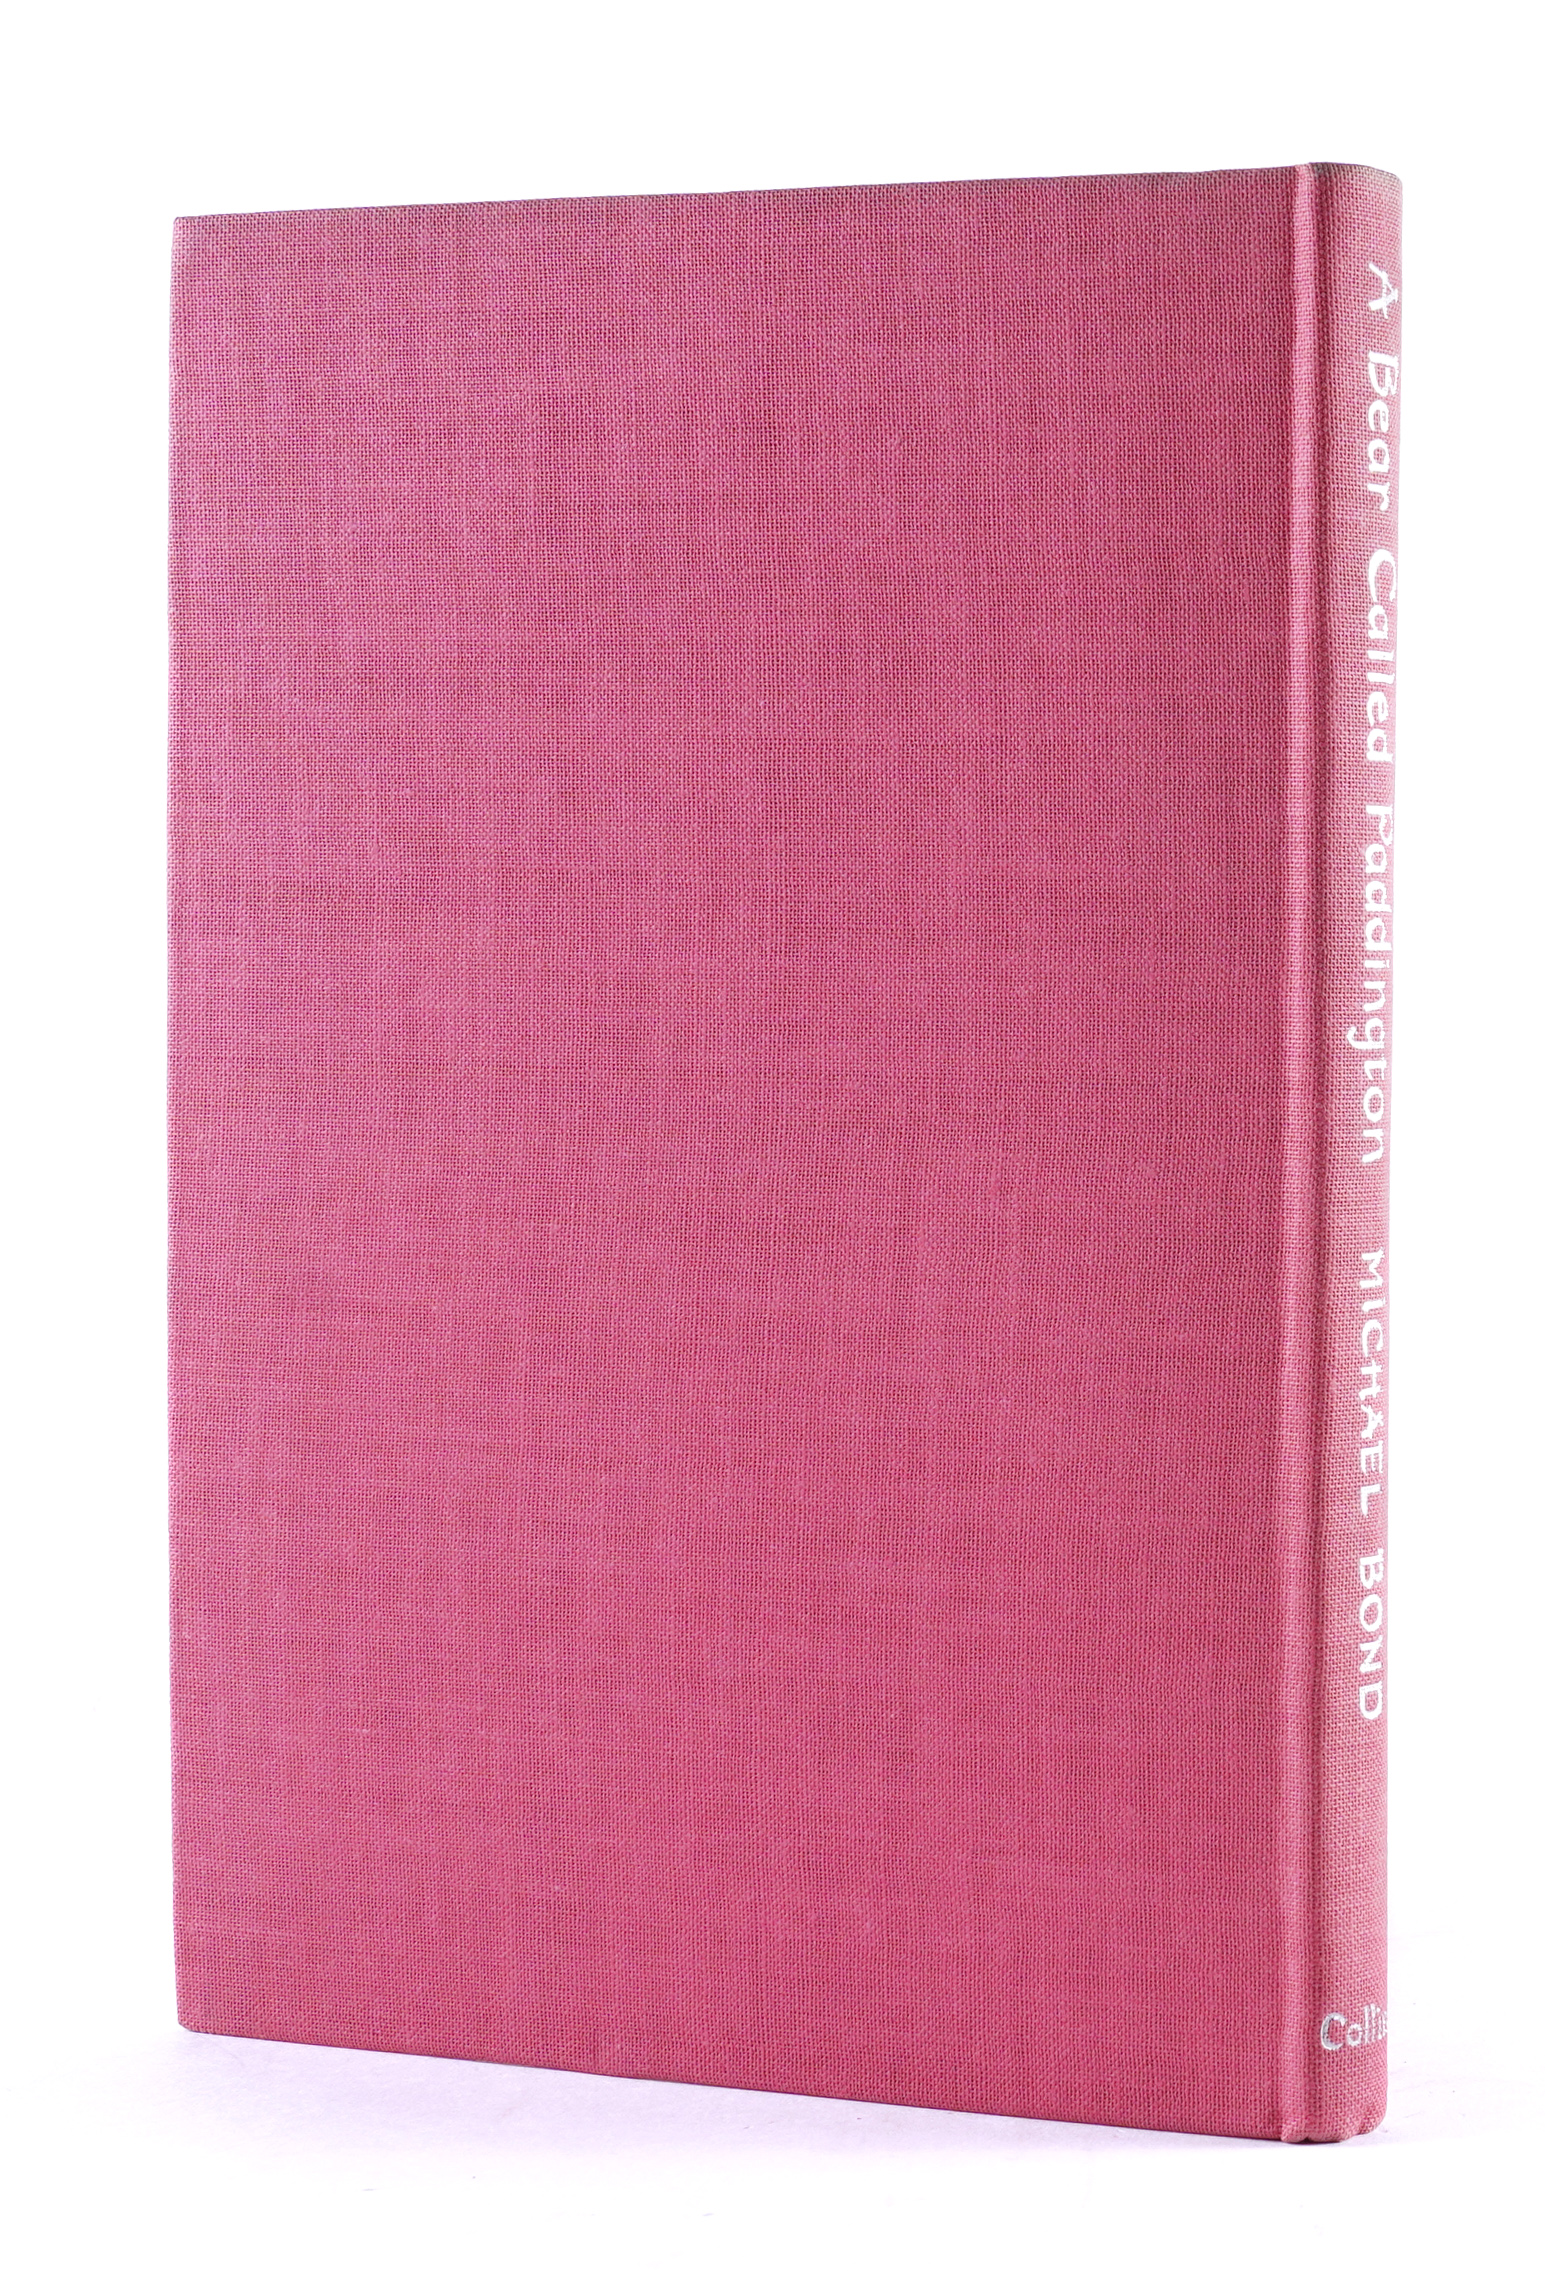 BOND, Michael (1926-2017). A Bear Called Paddington, London, 1958, 8vo, original pink cloth,... - Image 11 of 11